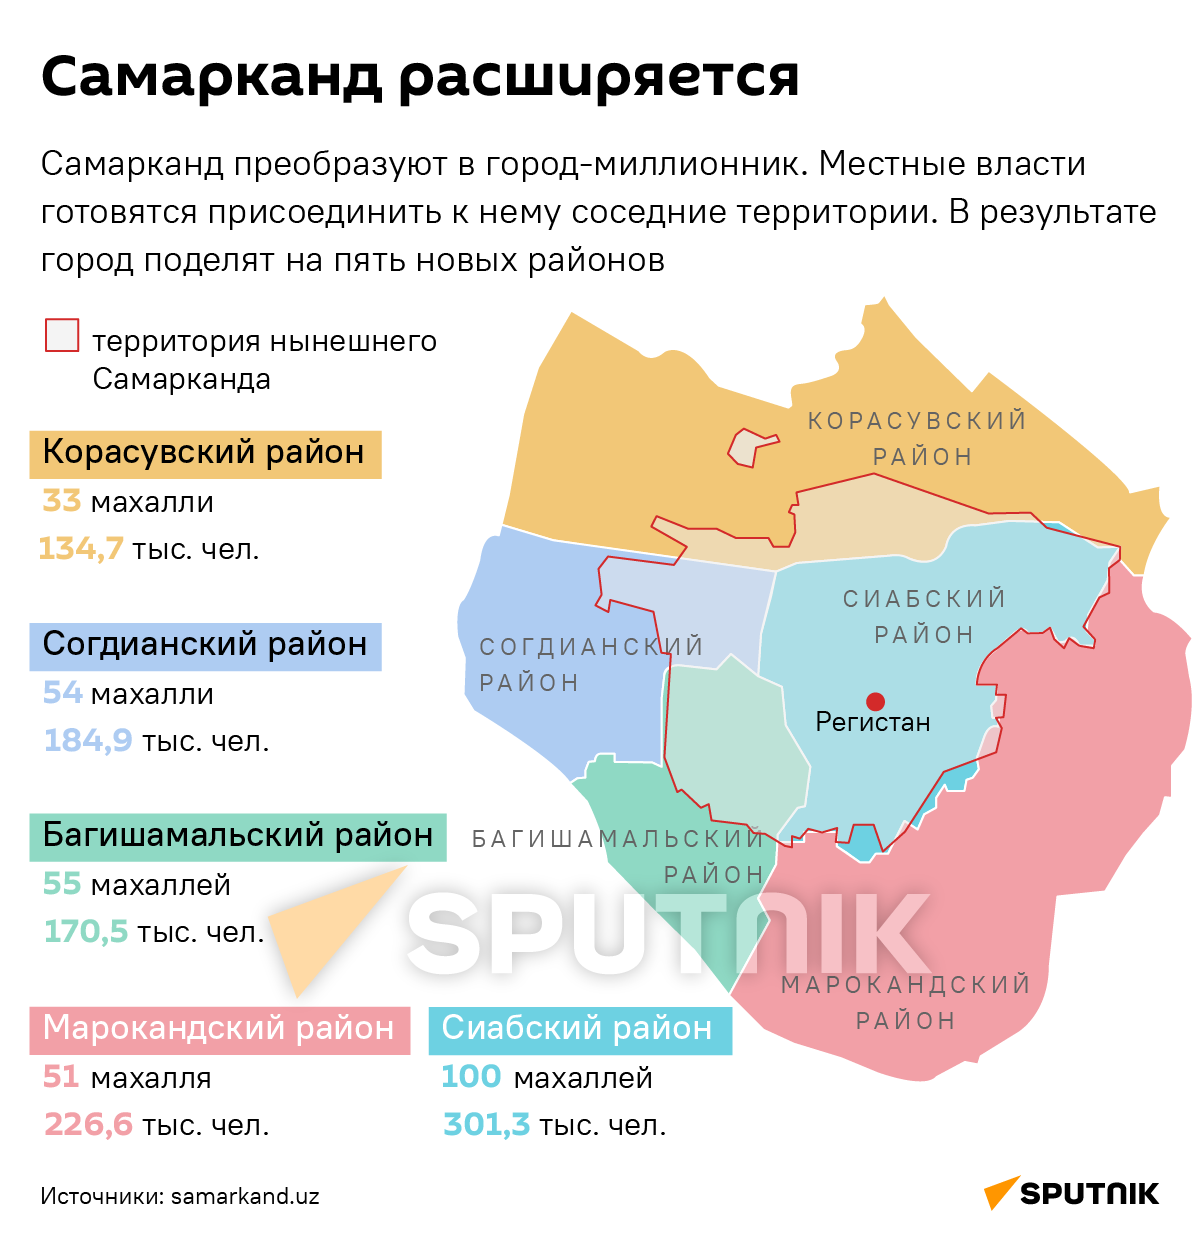 Самарканд расширяется  - Sputnik Узбекистан